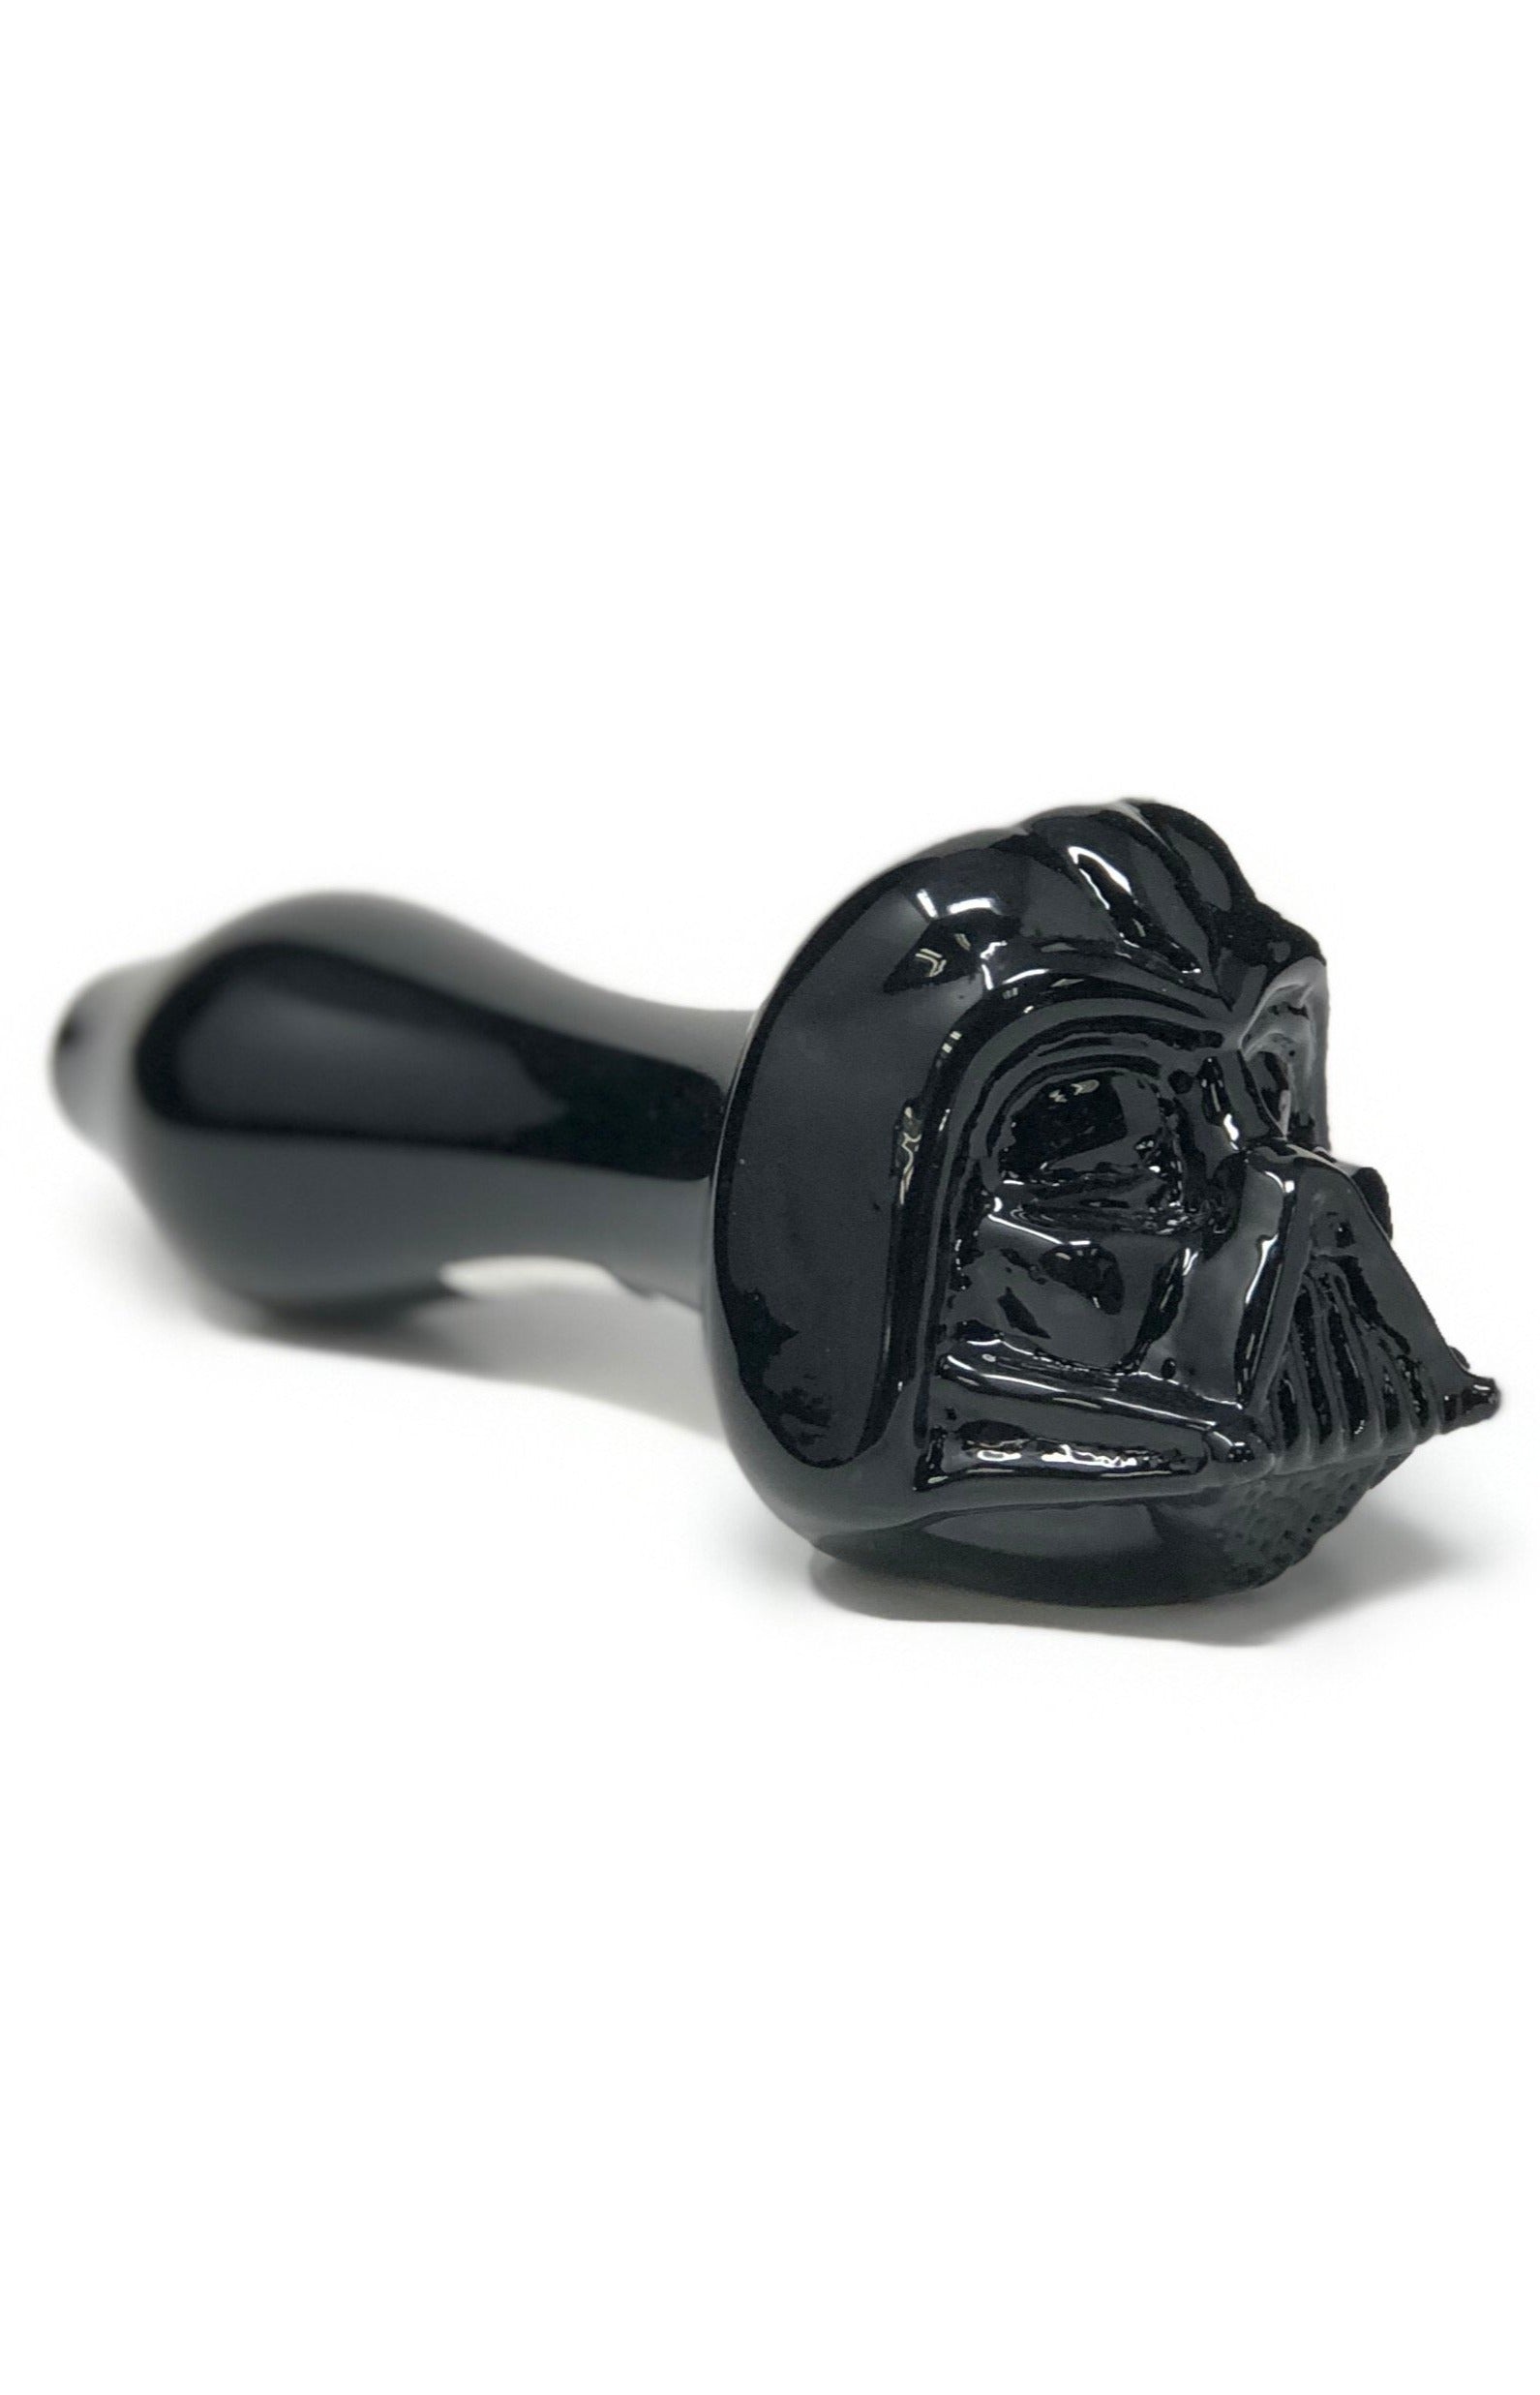 Darth Vader Glass Pipe